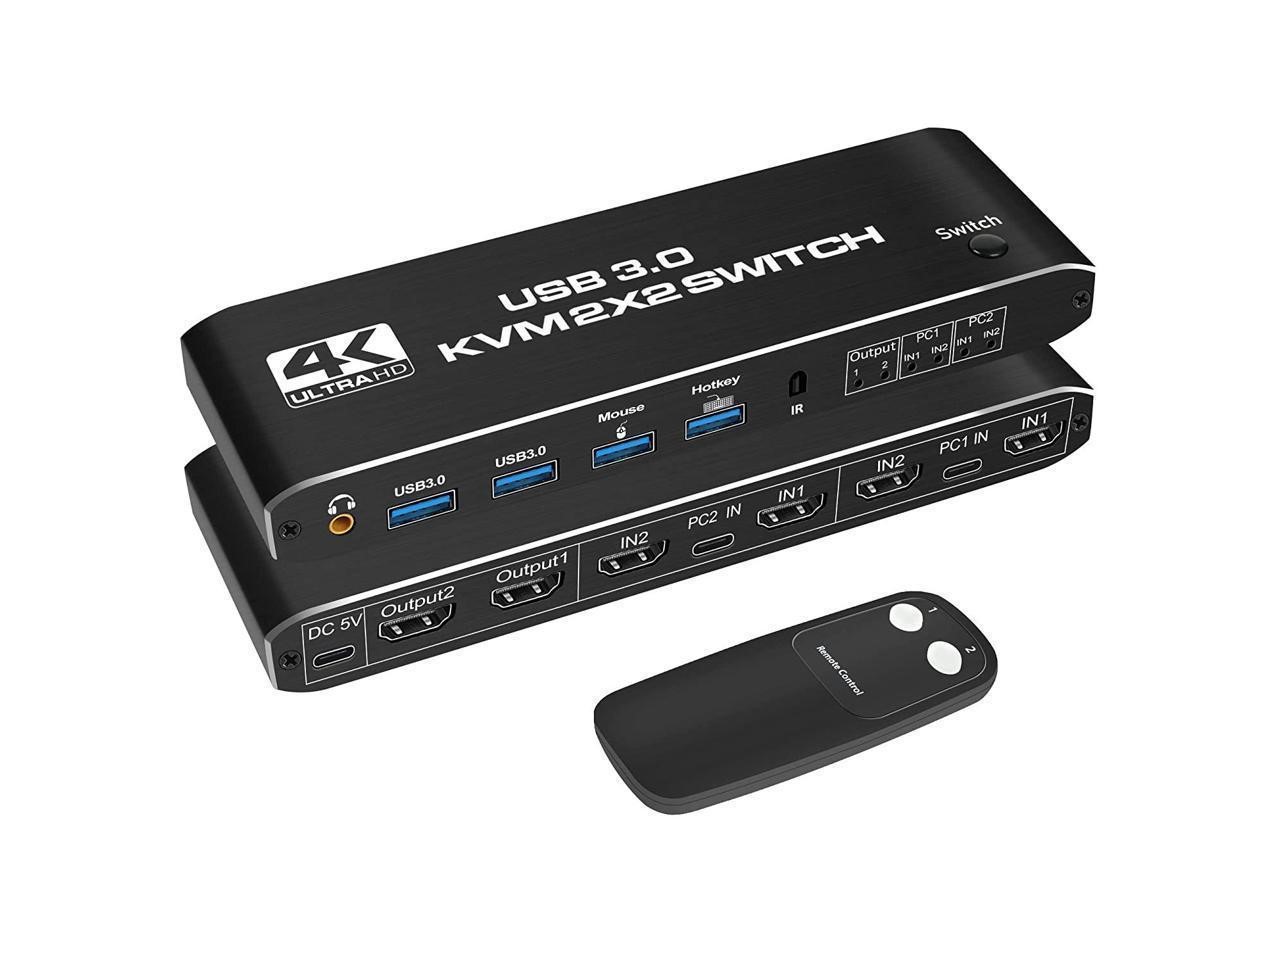 HF-DVHK2: HDMI 2.0 KVM SWITCH Dual Monitor 2x2 4K/60Hz 2PORT USB3.0 w/HotKey